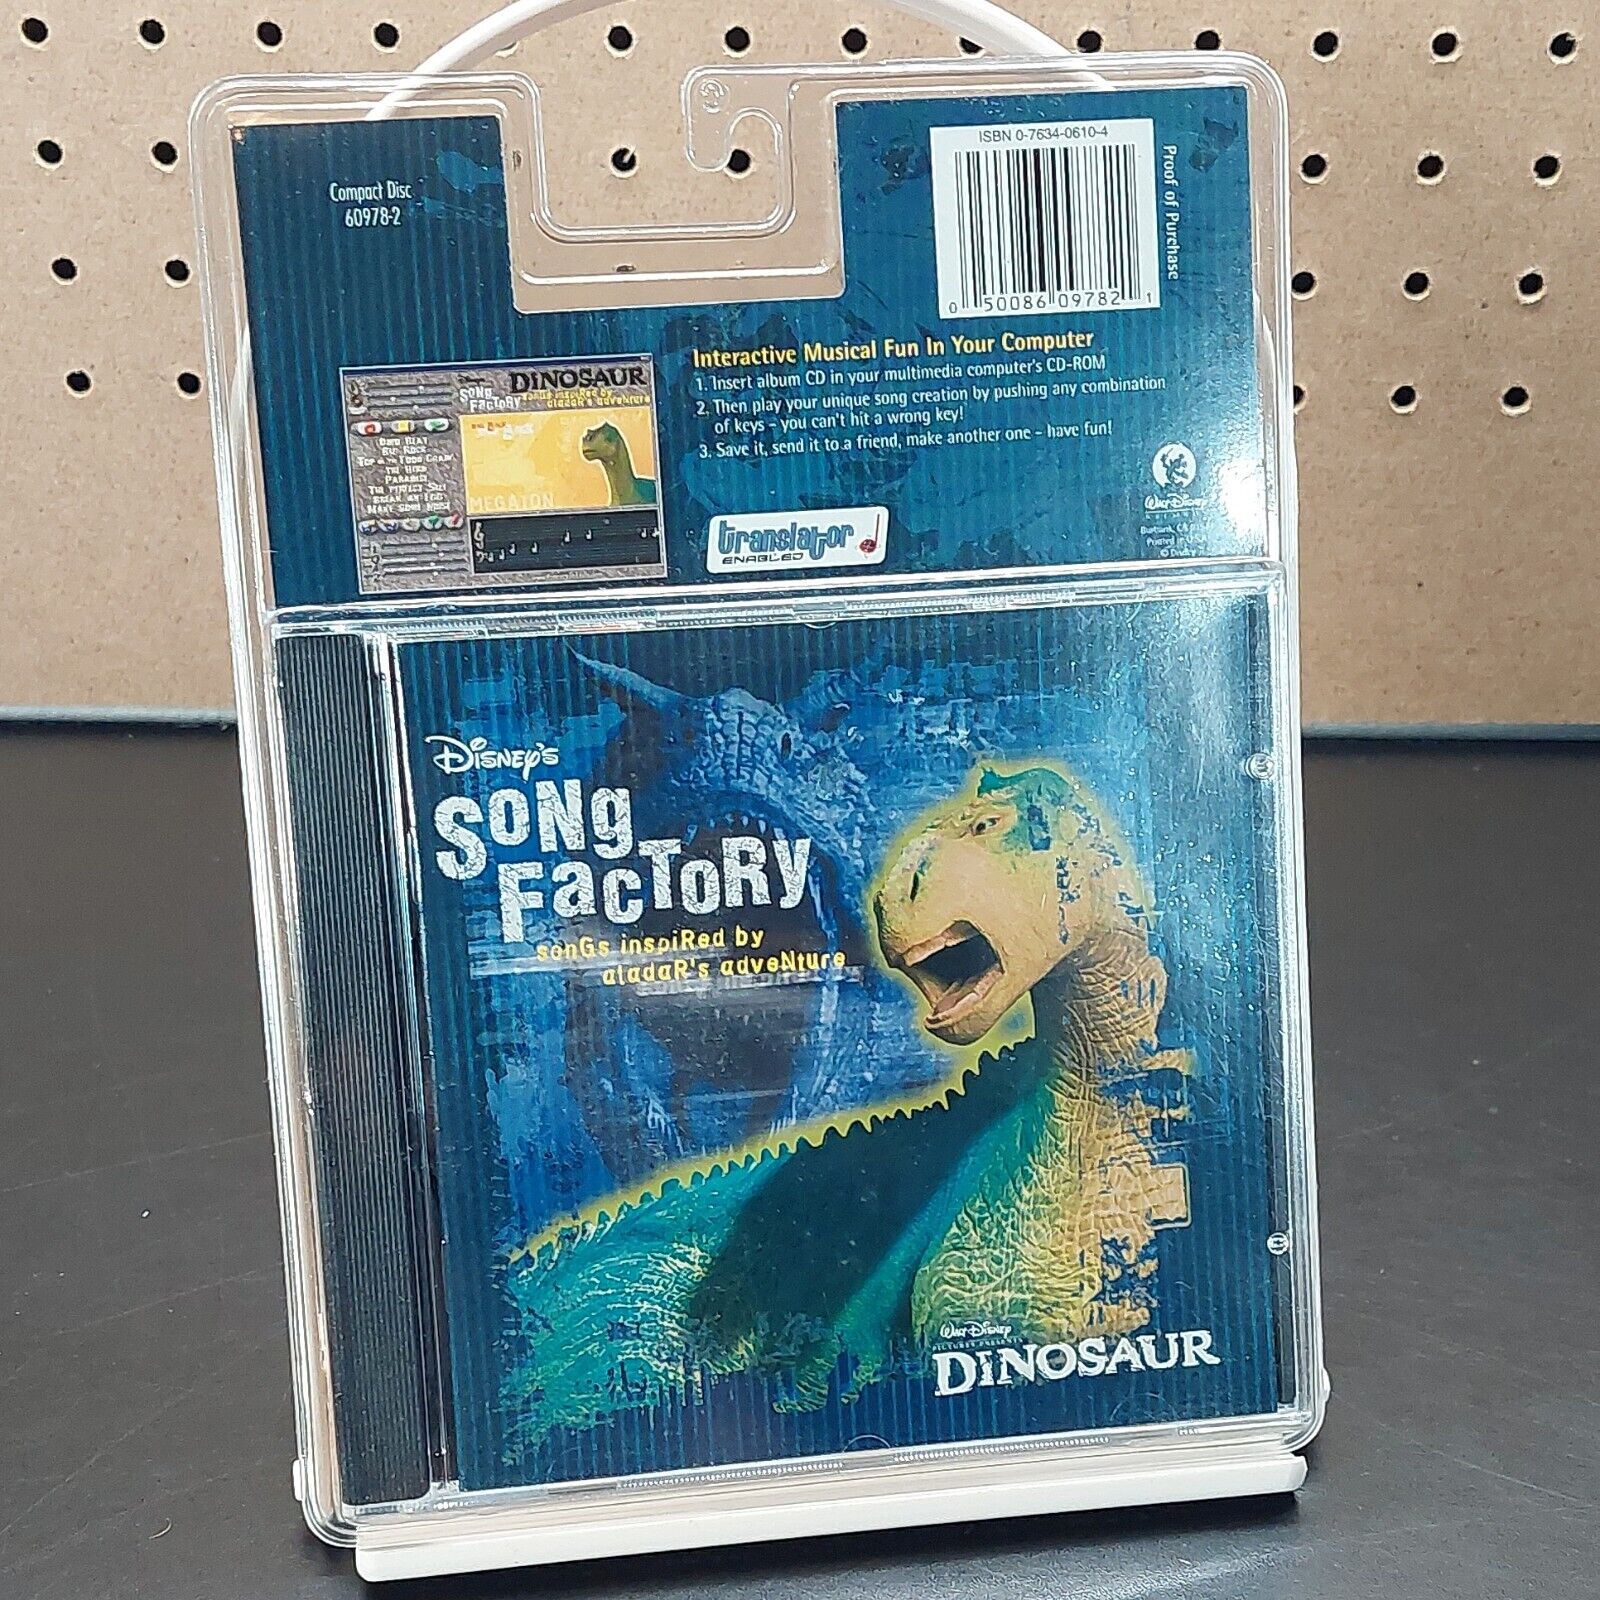 Disney\'s Song Factory: Dinosaur by Disney CD May 2000